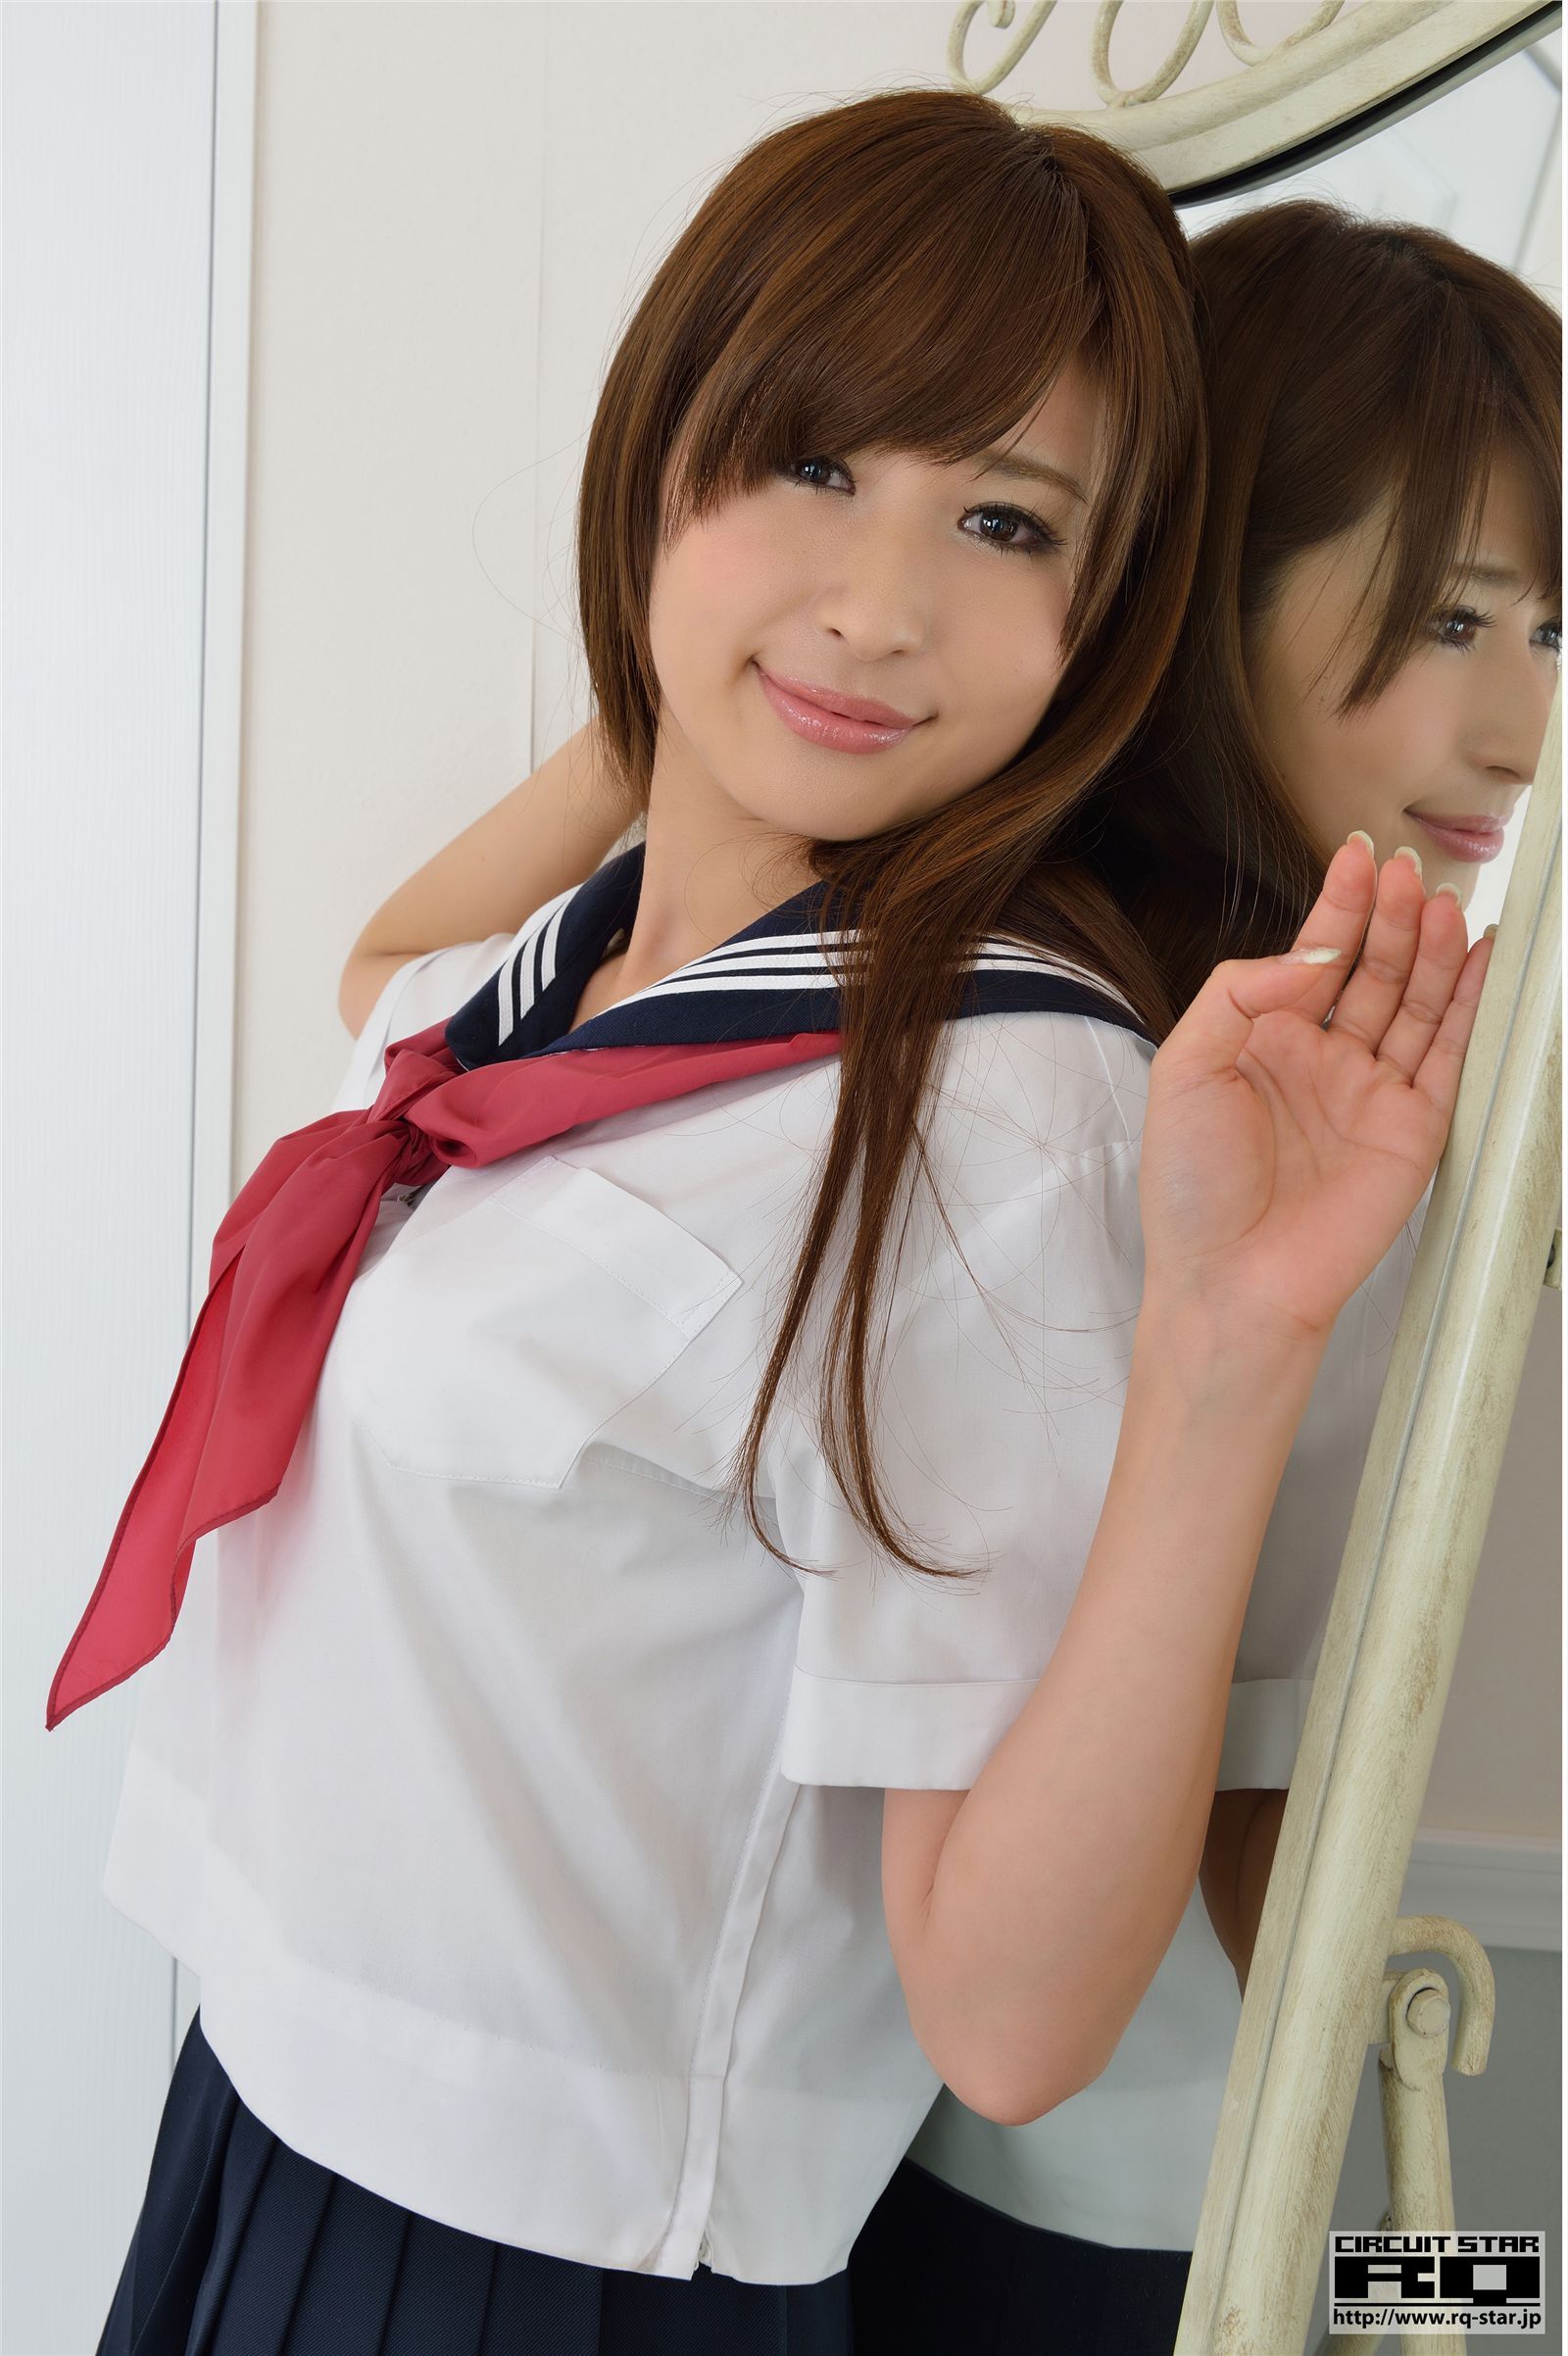 No.00684 Ma Lingxiang student uniform rq-star uniform beautiful girl